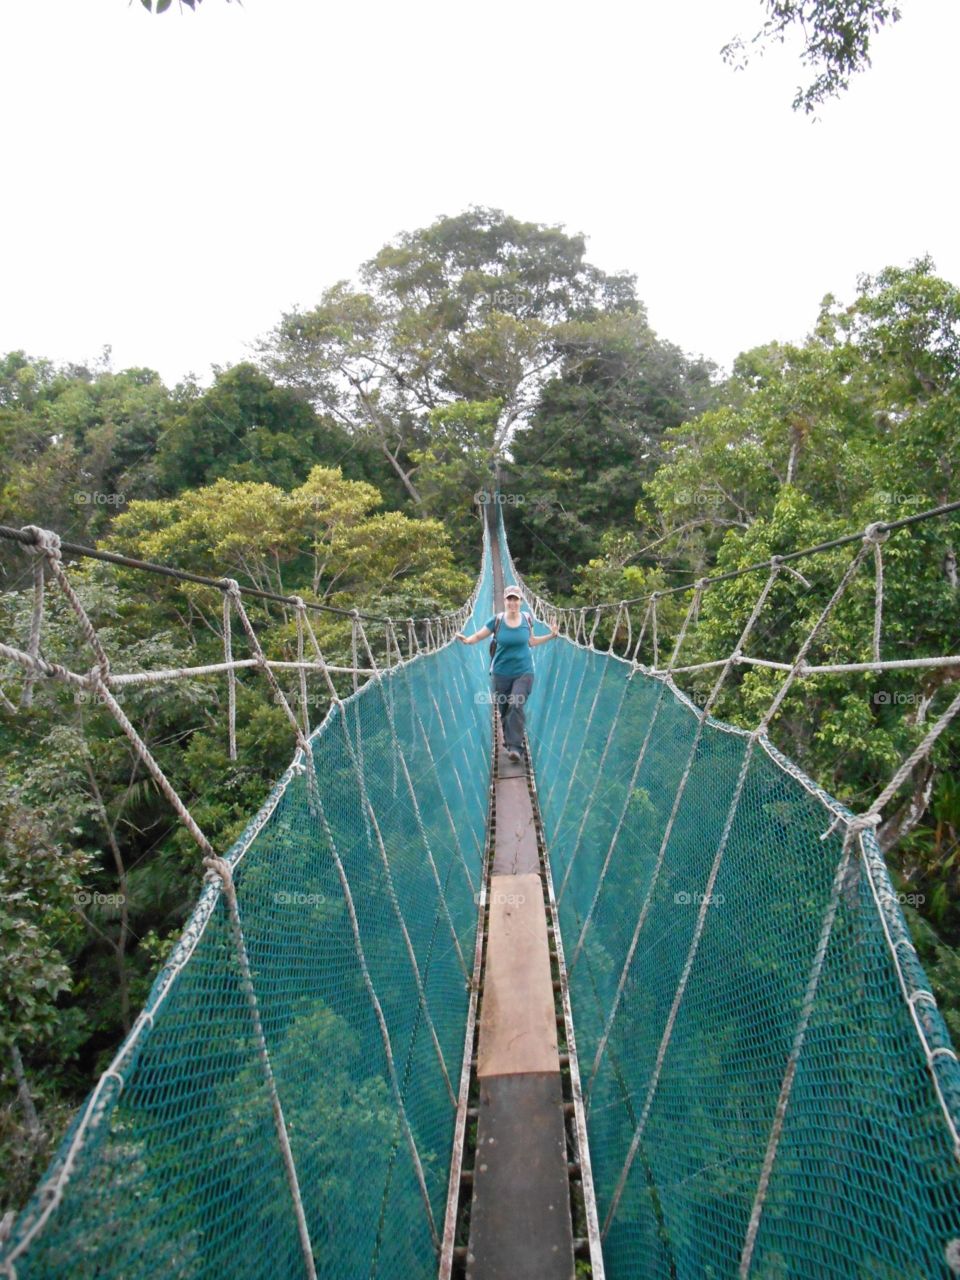 Peru, Amazon rain forest